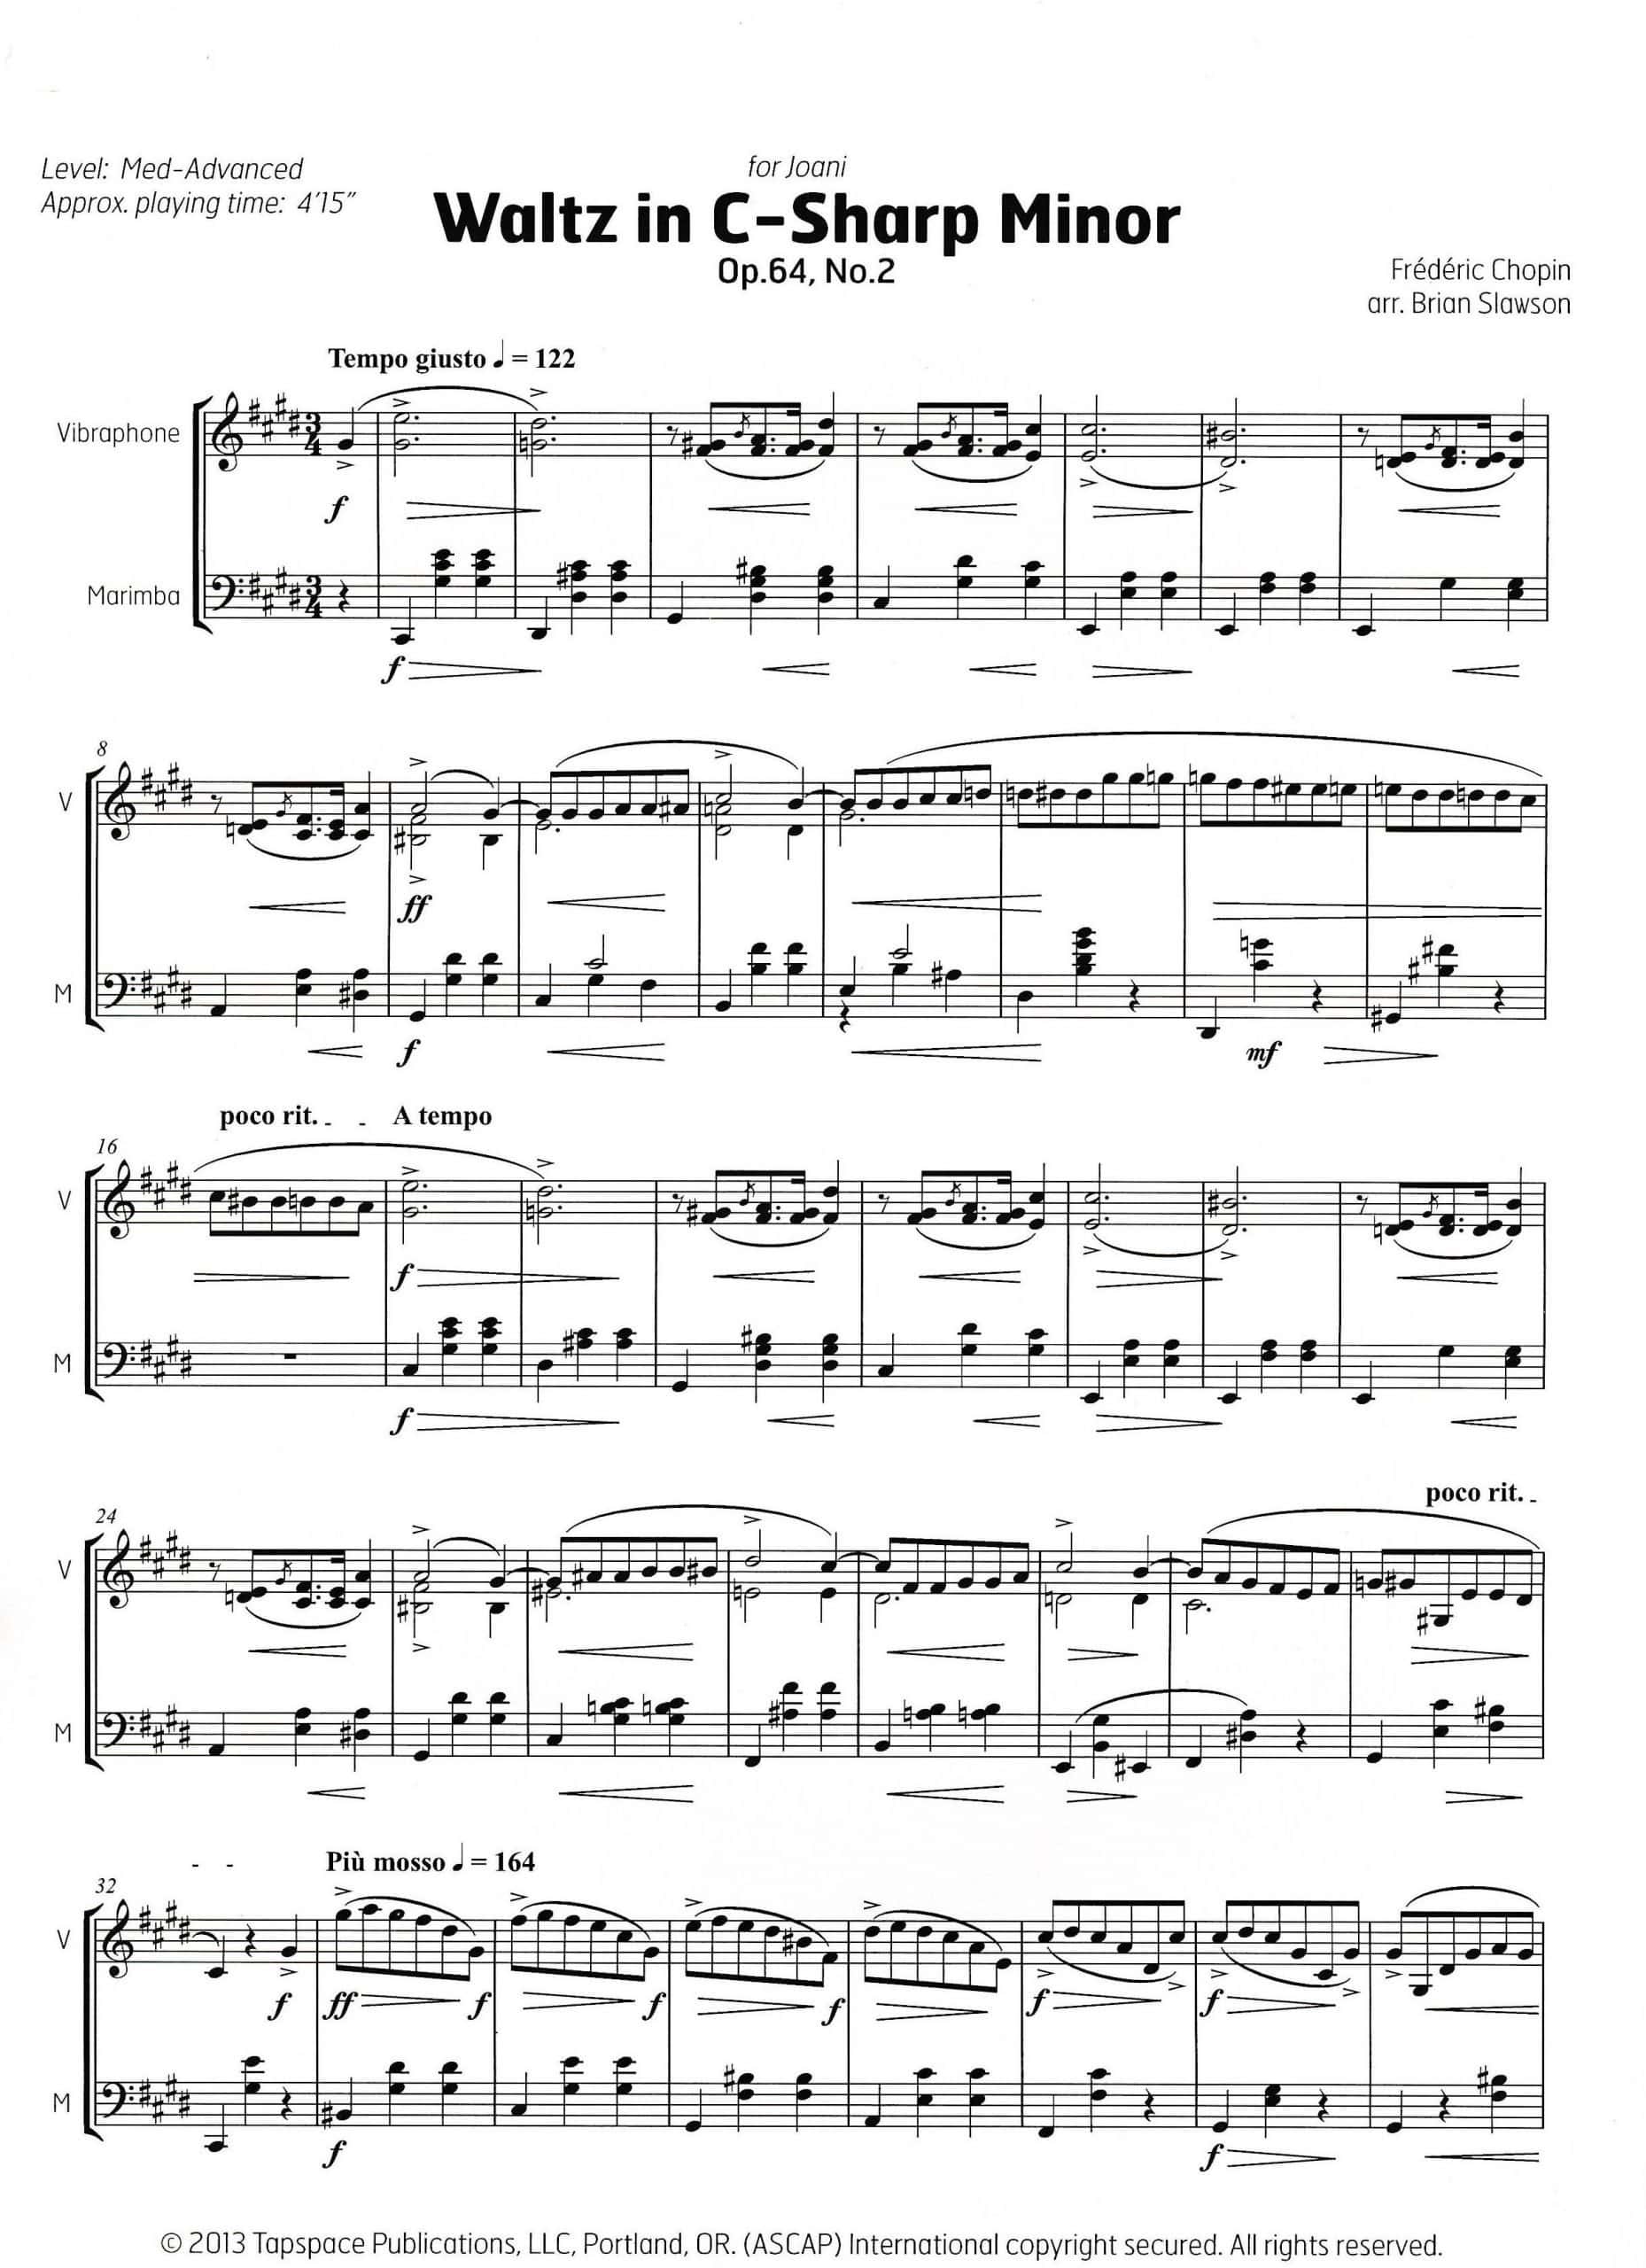 Waltz in C-Sharp Minor Op.64, No.2 by Chopin arr. Brian Slawson